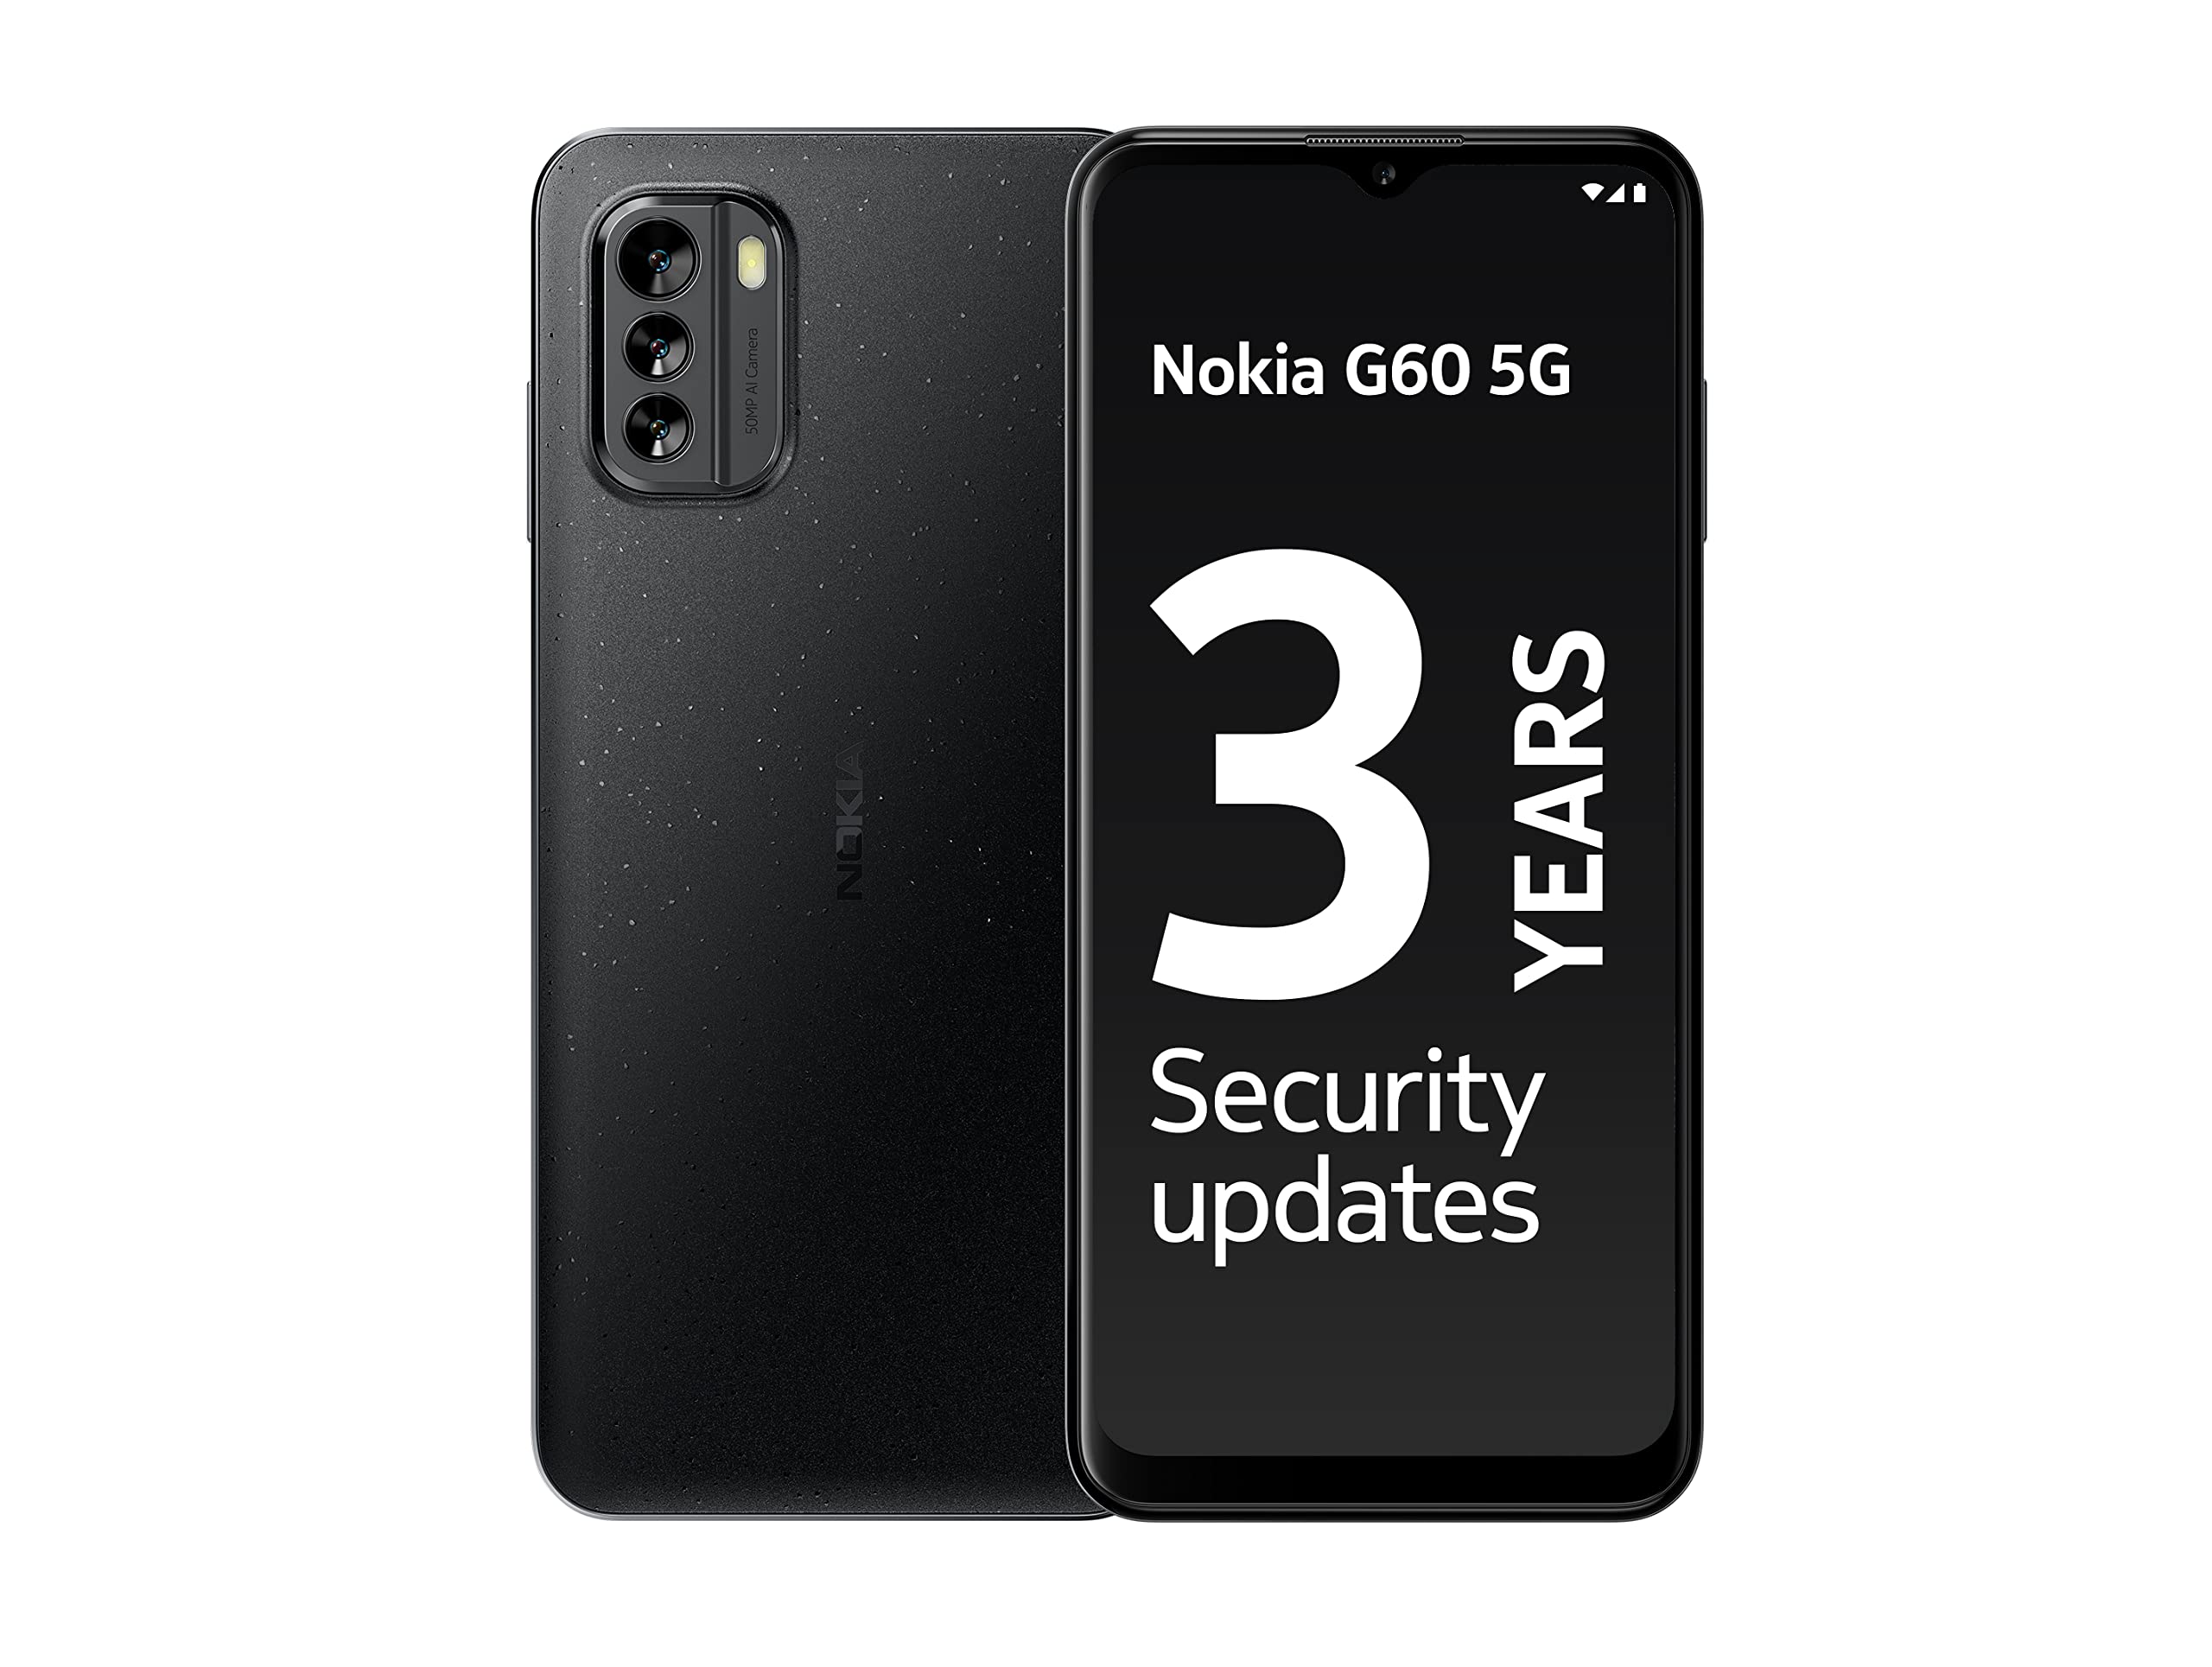 Nokia G60 5G Dual-SIM 64GB ROM + 4GB RAM (GSM only | No CDMA) Factory Unlocked 5G Smartphone (Black) - International Version